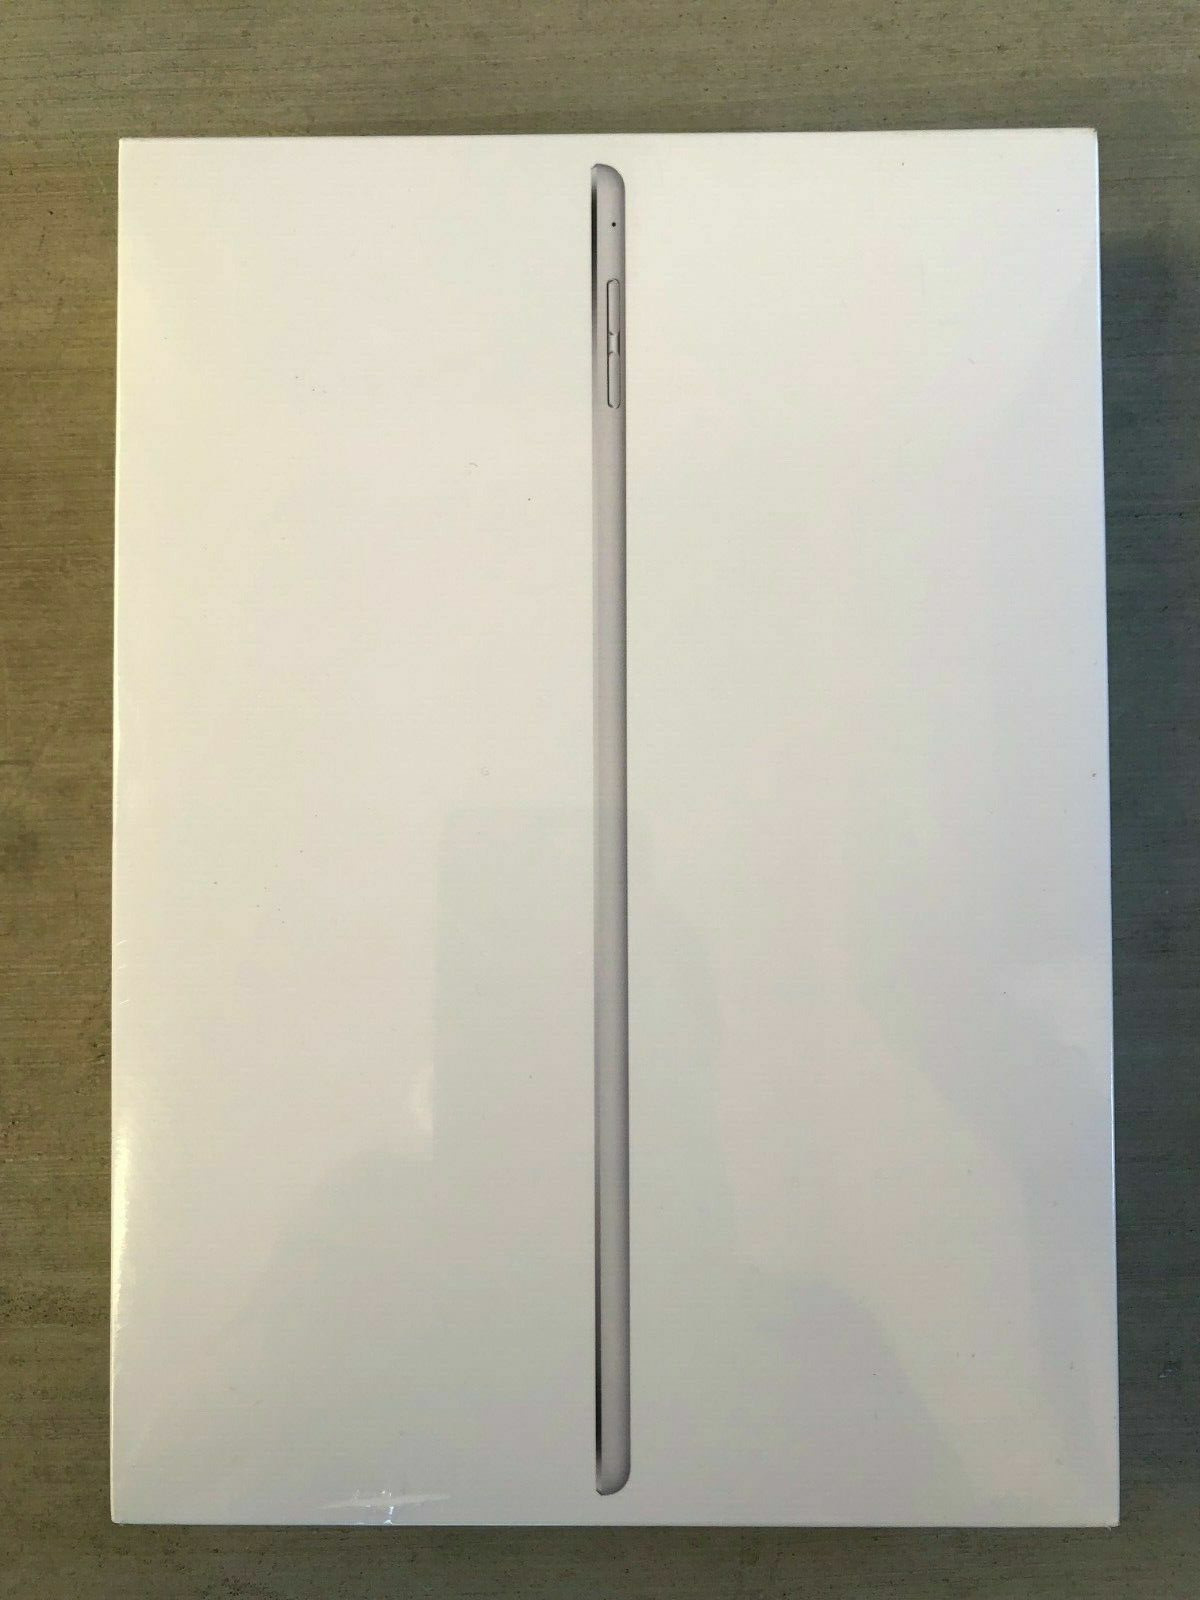 New sealed Apple iPad mini 2 32GB Wi-Fi Silver ME280LL/A A1489 iOS 9